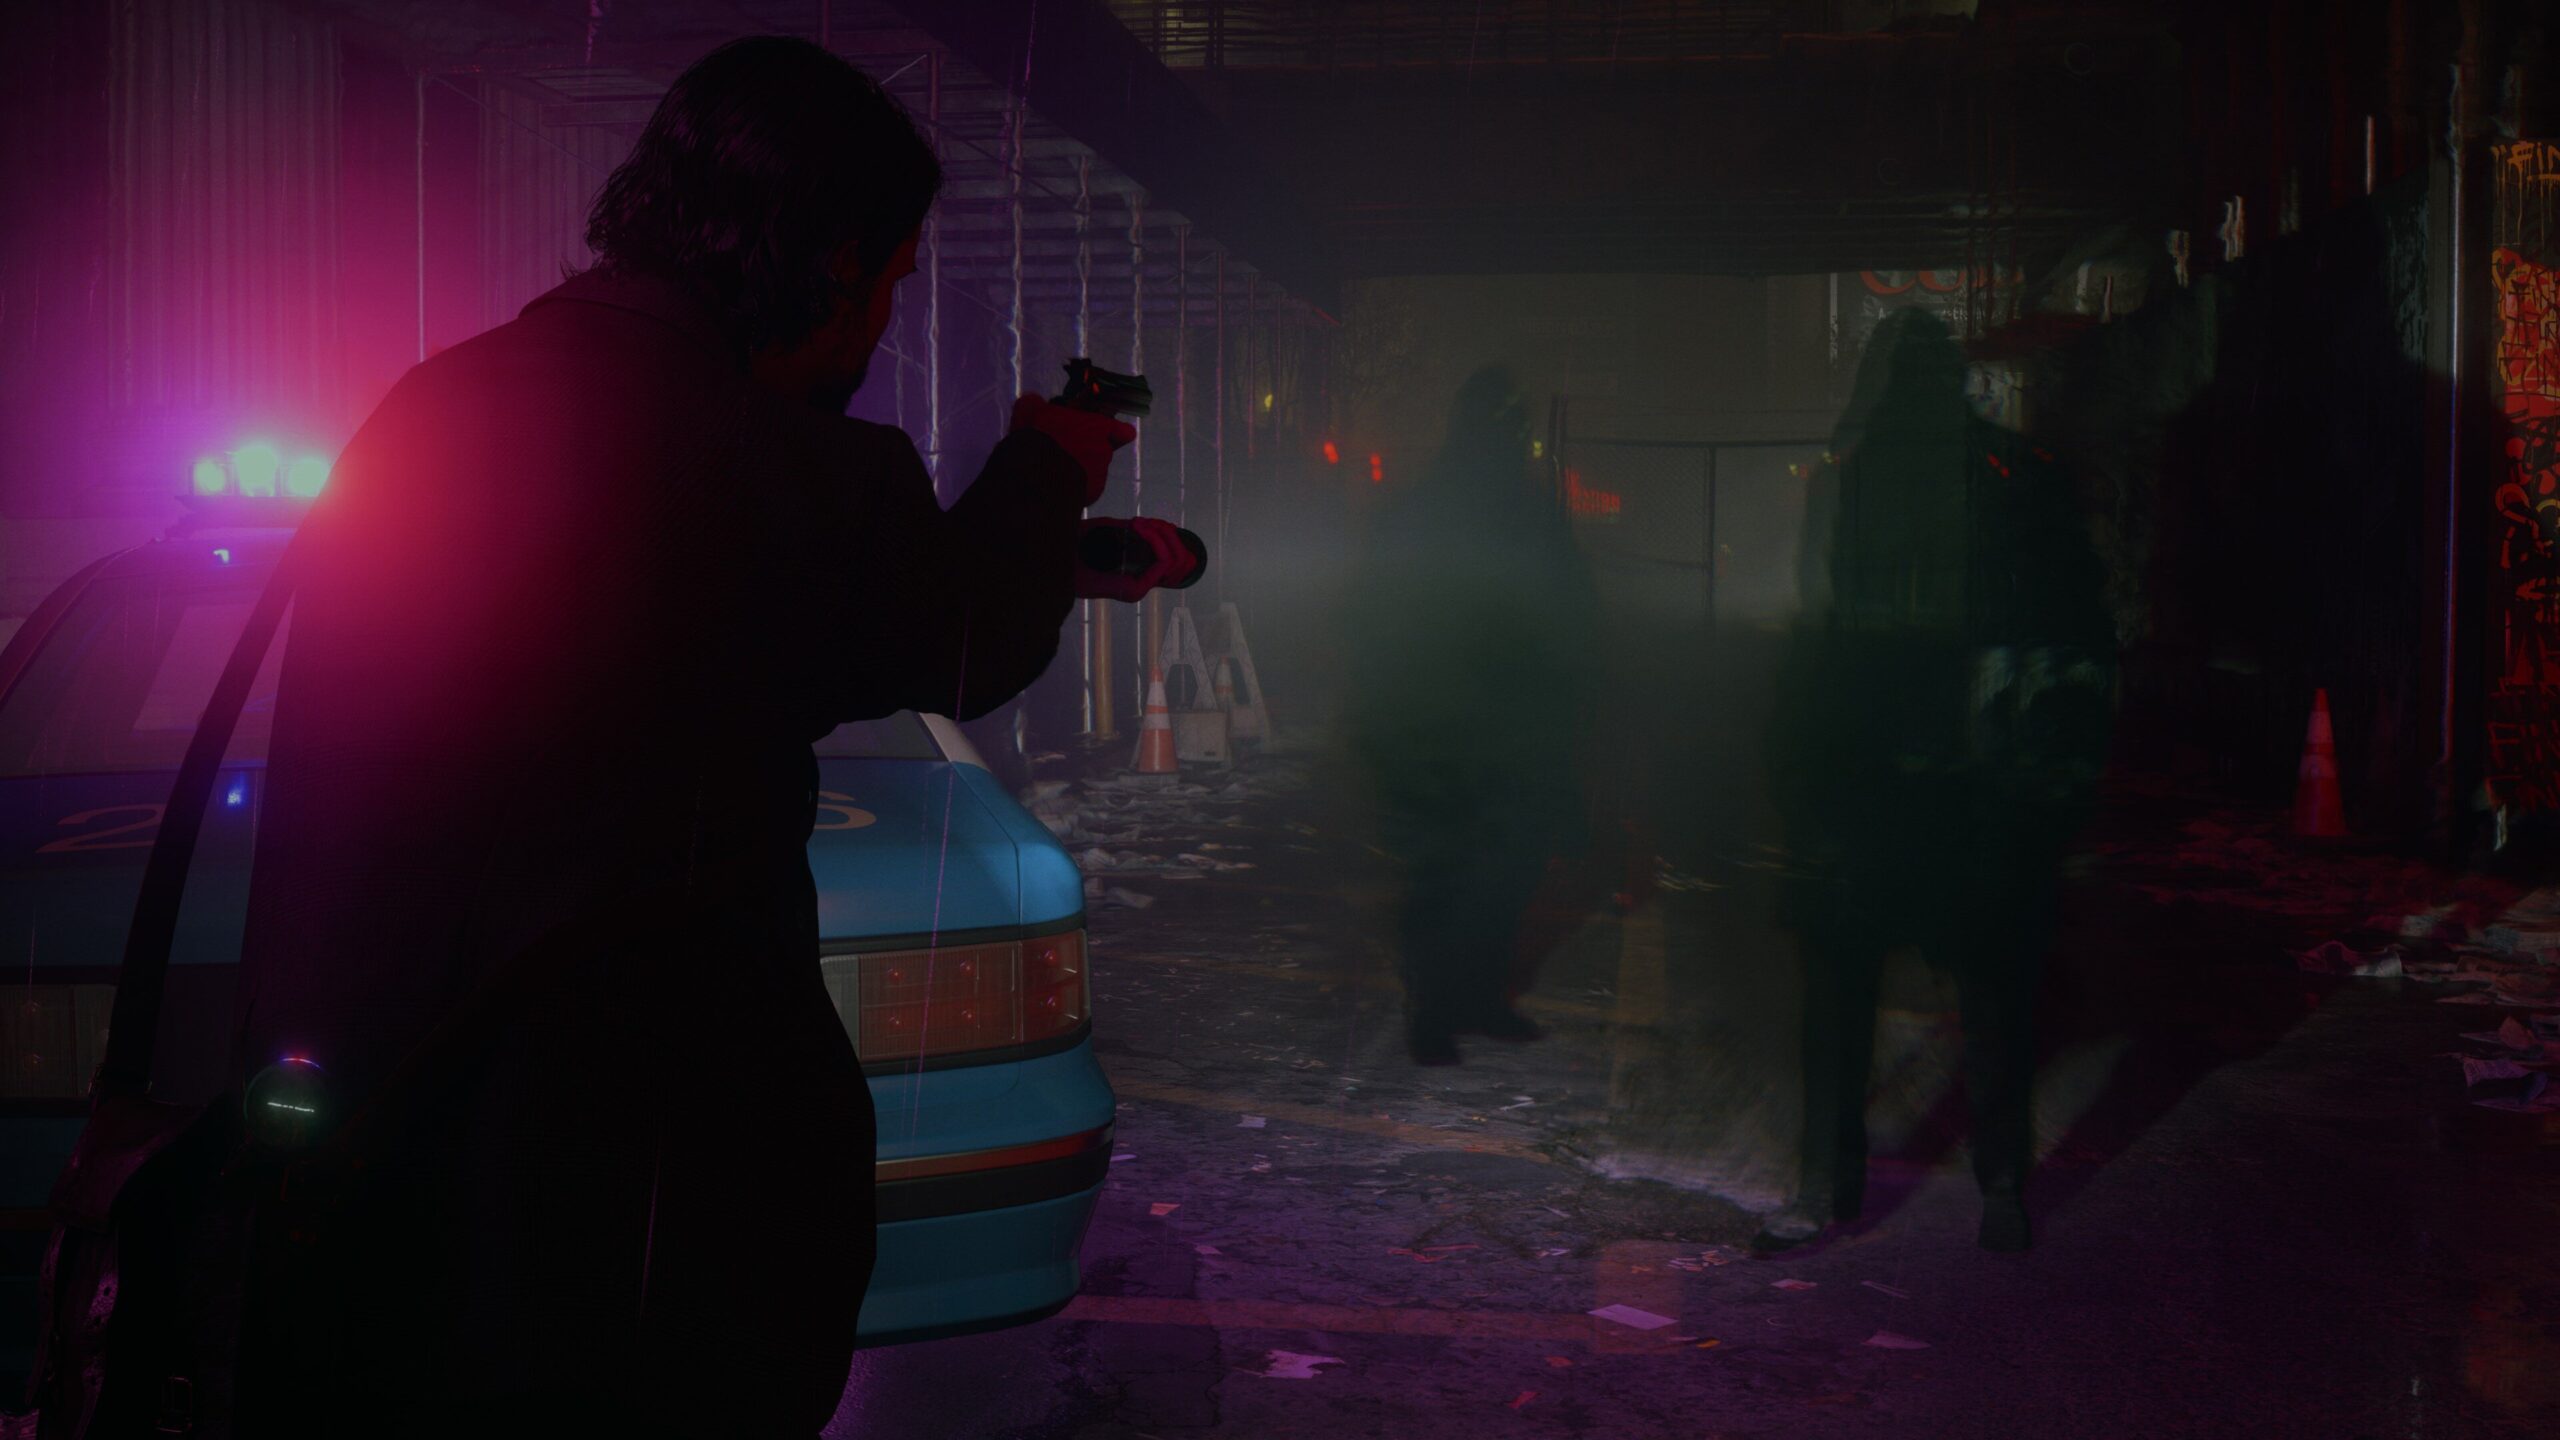 Alan Wake 2 gamescom Showcase Features The Dark Place